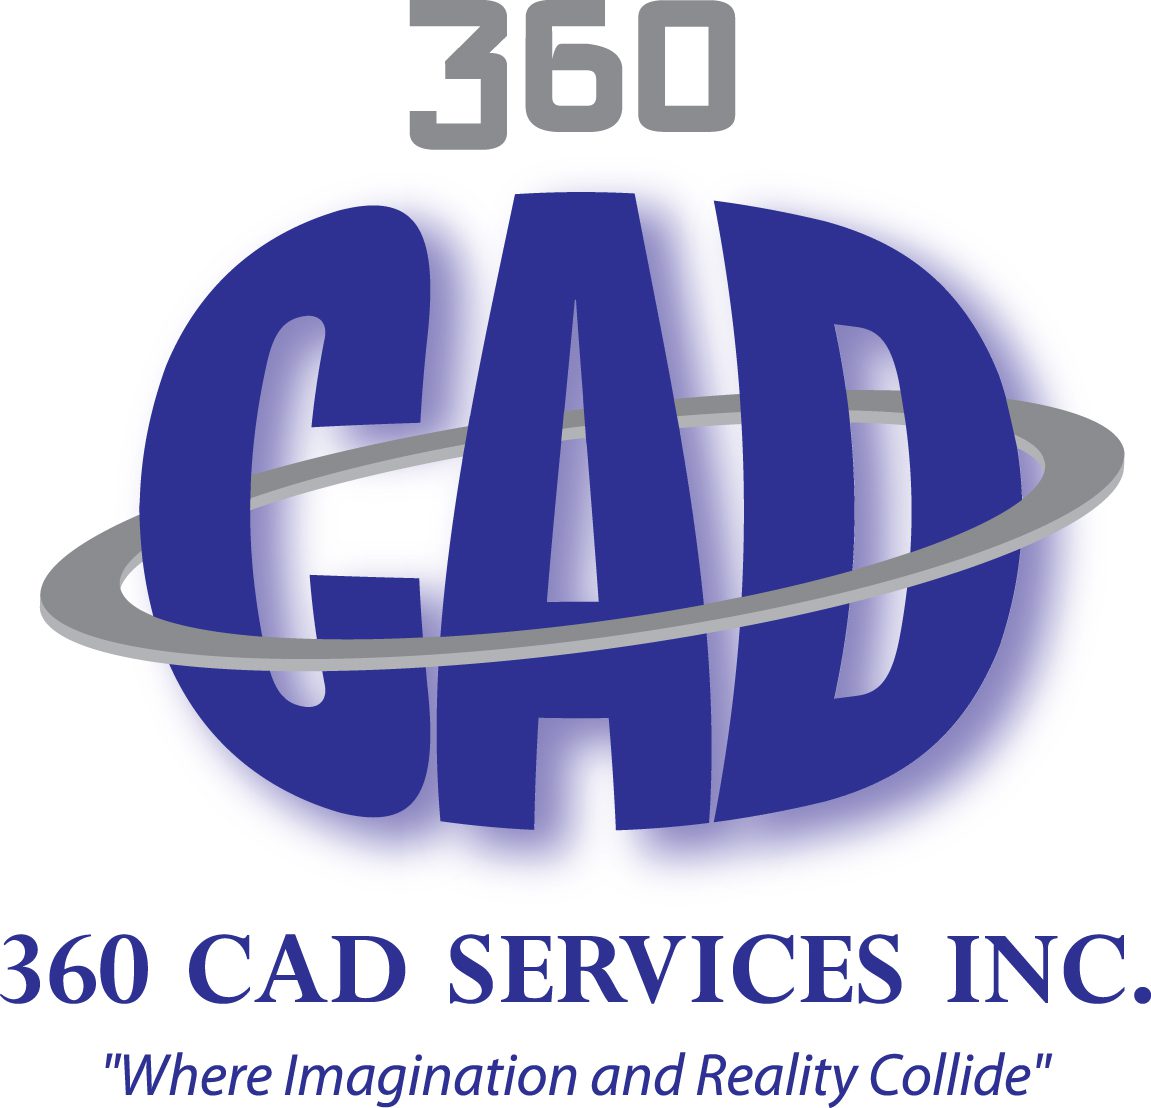 360 CAD Services Inc